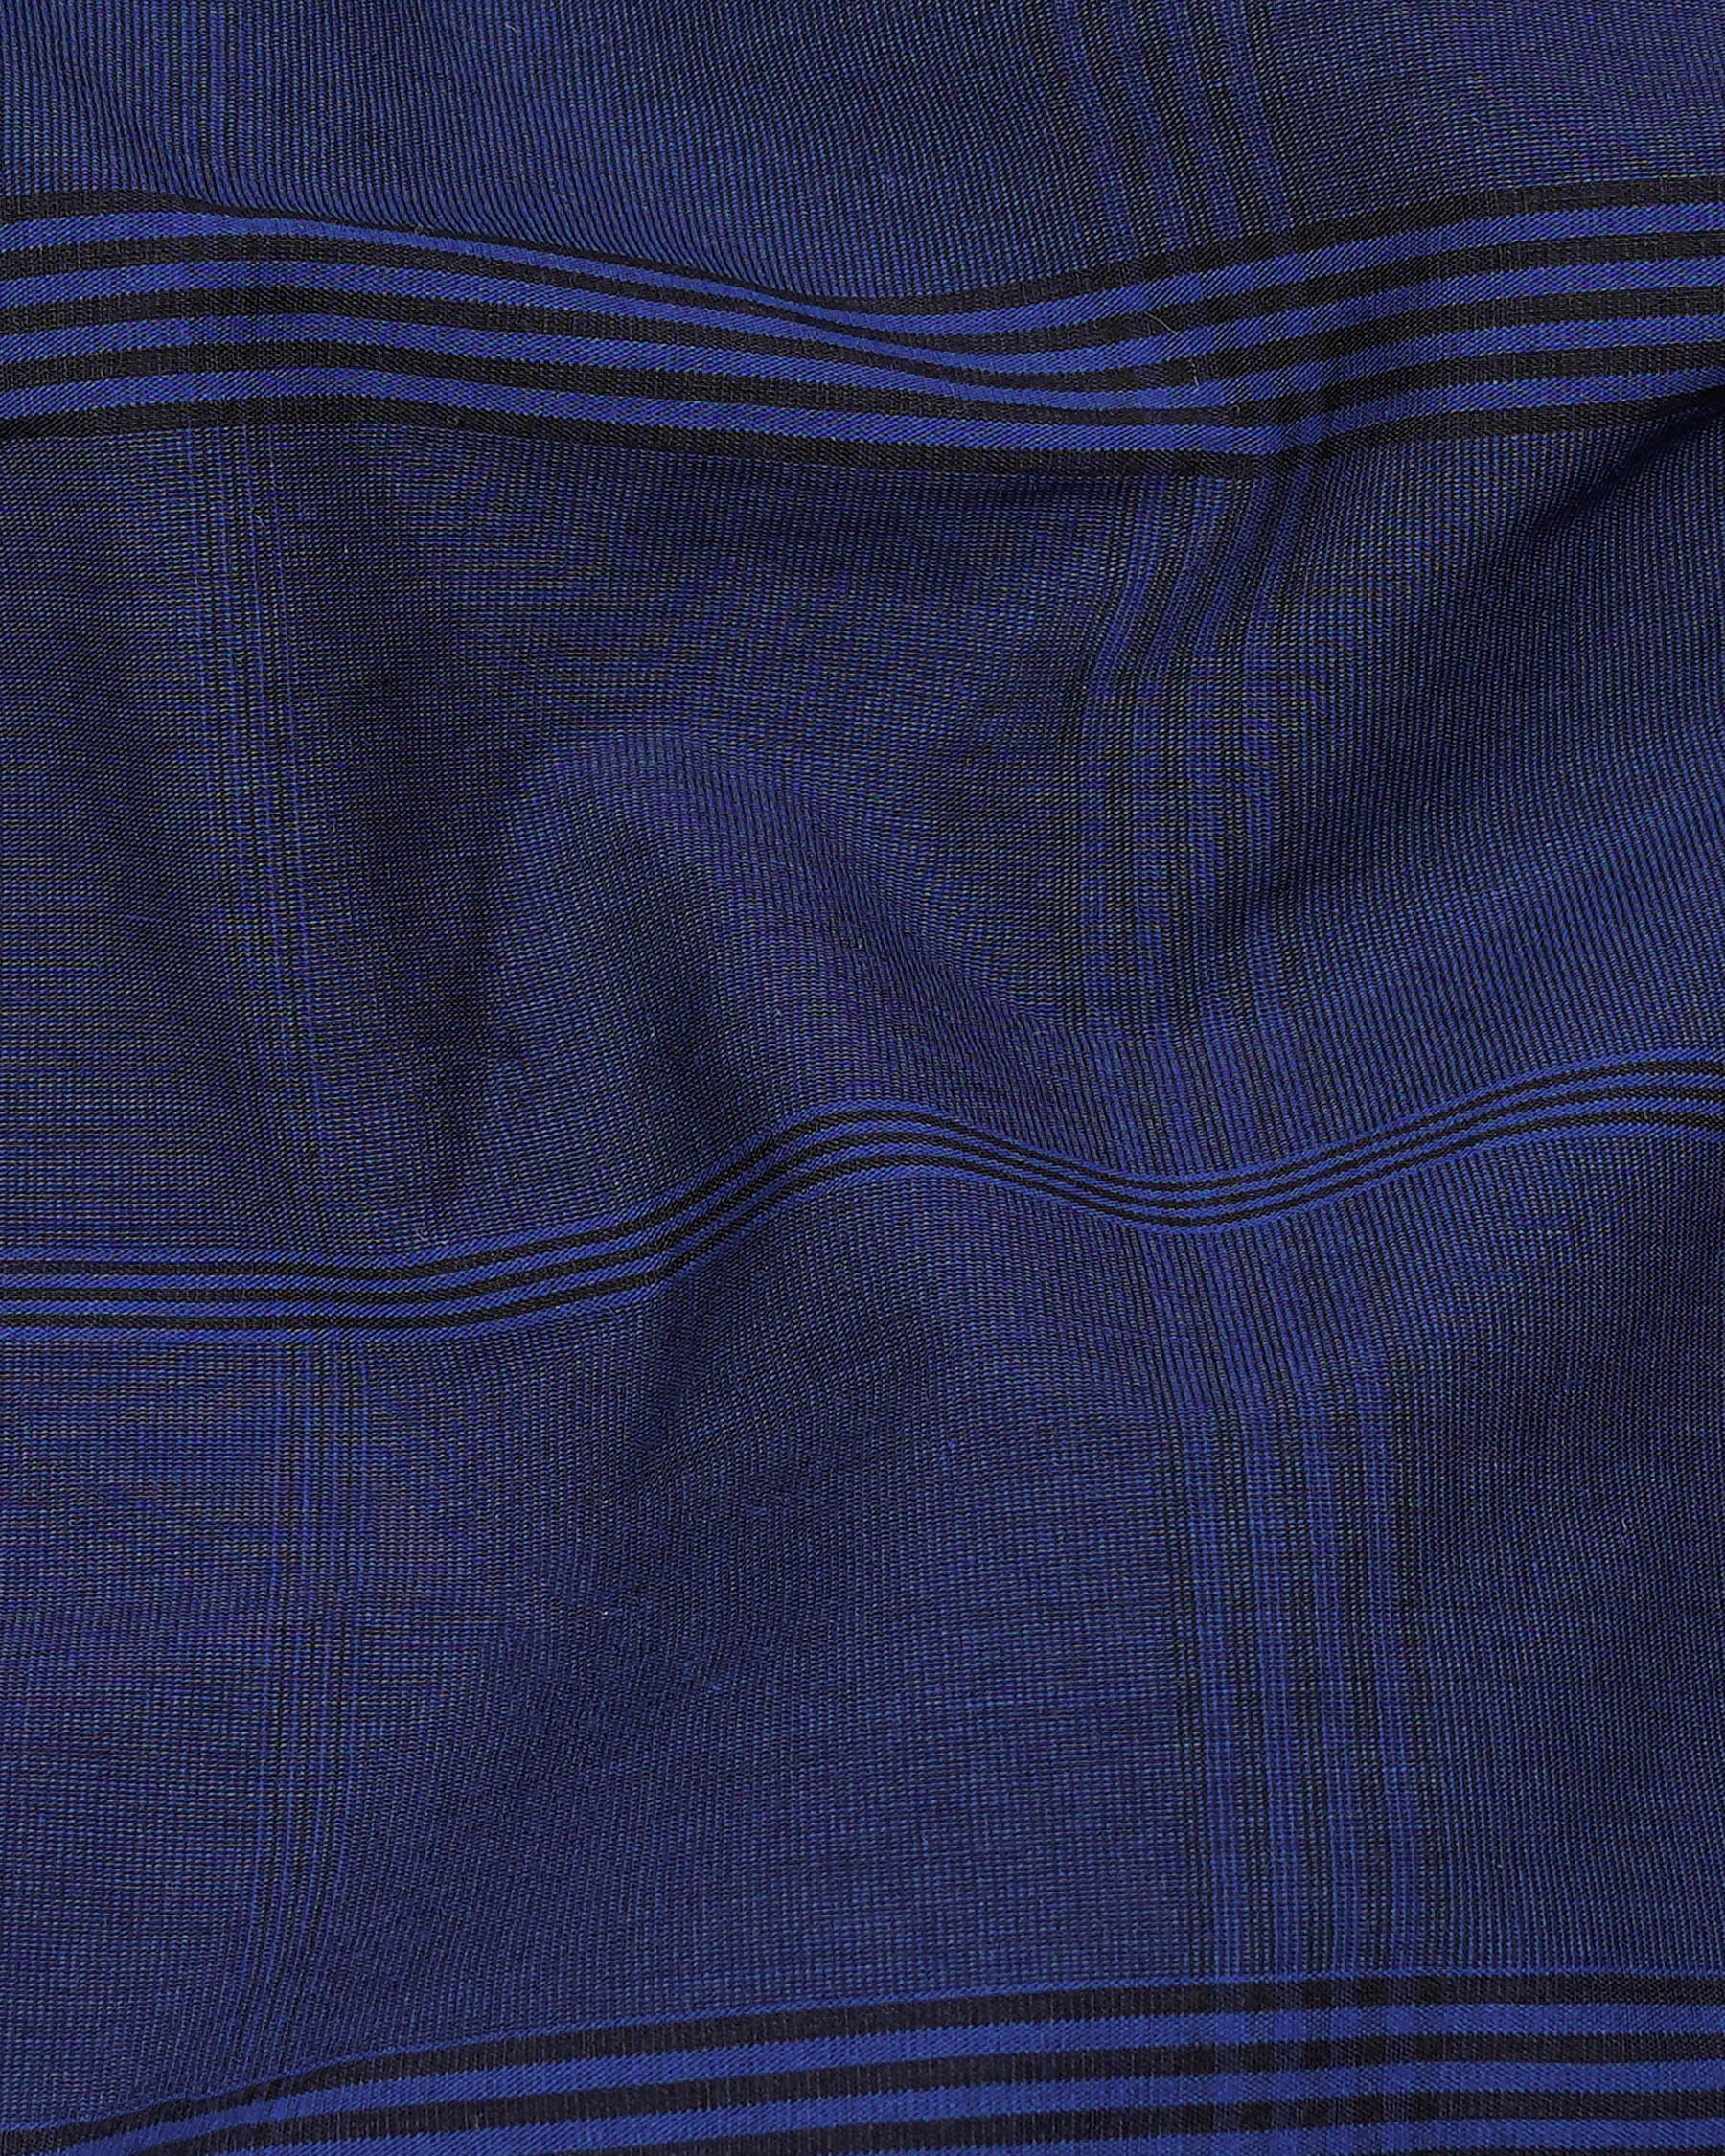 Cloud Burst Blue Striped Textured Premium Cotton Shirt 8013-BLE-38,8013-BLE-H-38,8013-BLE-39,8013-BLE-H-39,8013-BLE-40,8013-BLE-H-40,8013-BLE-42,8013-BLE-H-42,8013-BLE-44,8013-BLE-H-44,8013-BLE-46,8013-BLE-H-46,8013-BLE-48,8013-BLE-H-48,8013-BLE-50,8013-BLE-H-50,8013-BLE-52,8013-BLE-H-52